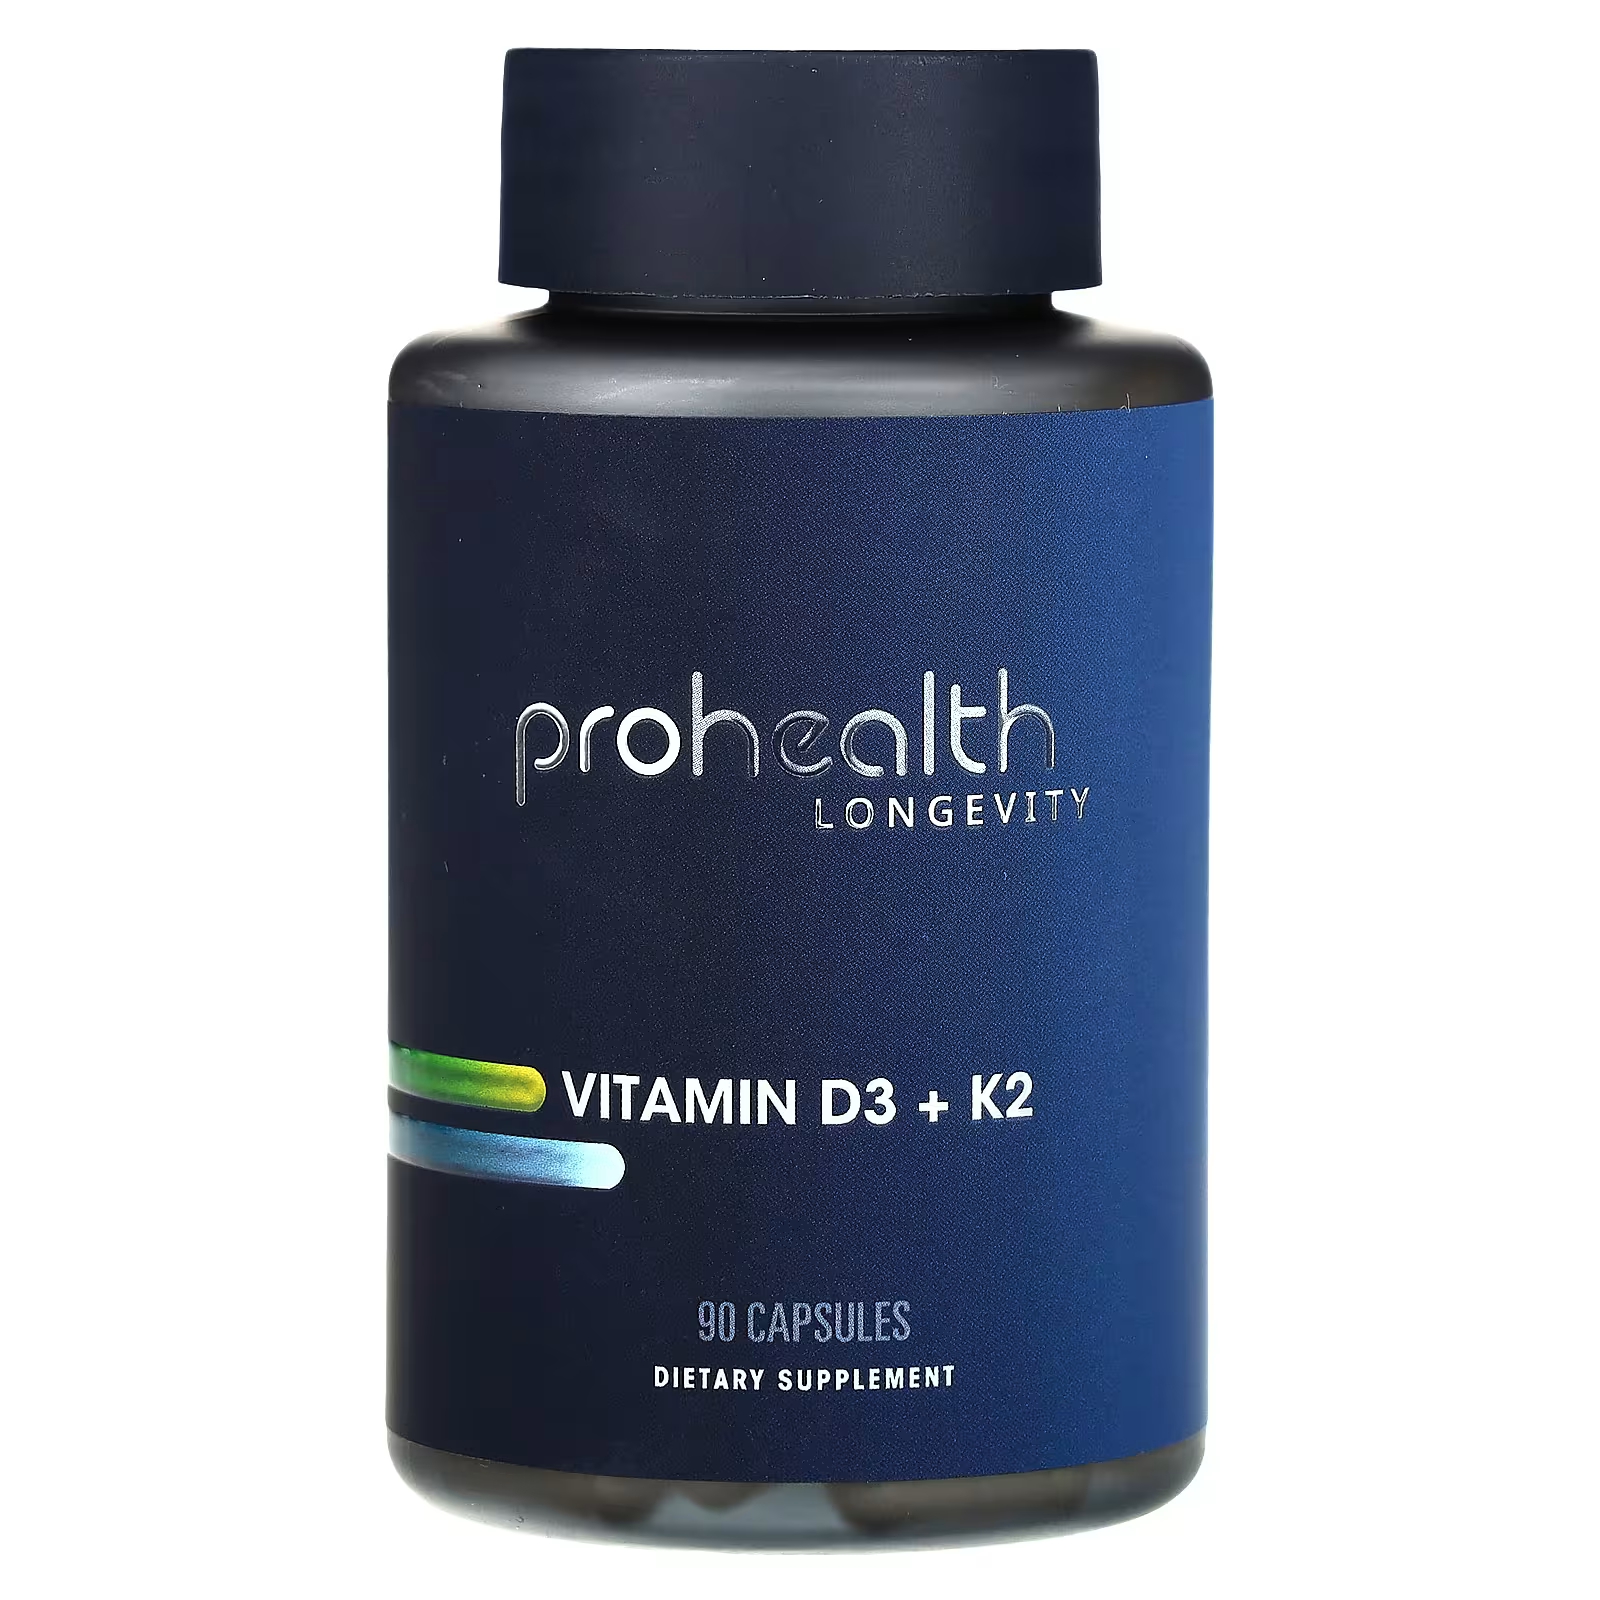 ProHealth Витамин D3 + K2 долголетия, 90 капсул ProHealth Longevity prohealth longevity mitochondria ignite 675 мг 90 таблеток